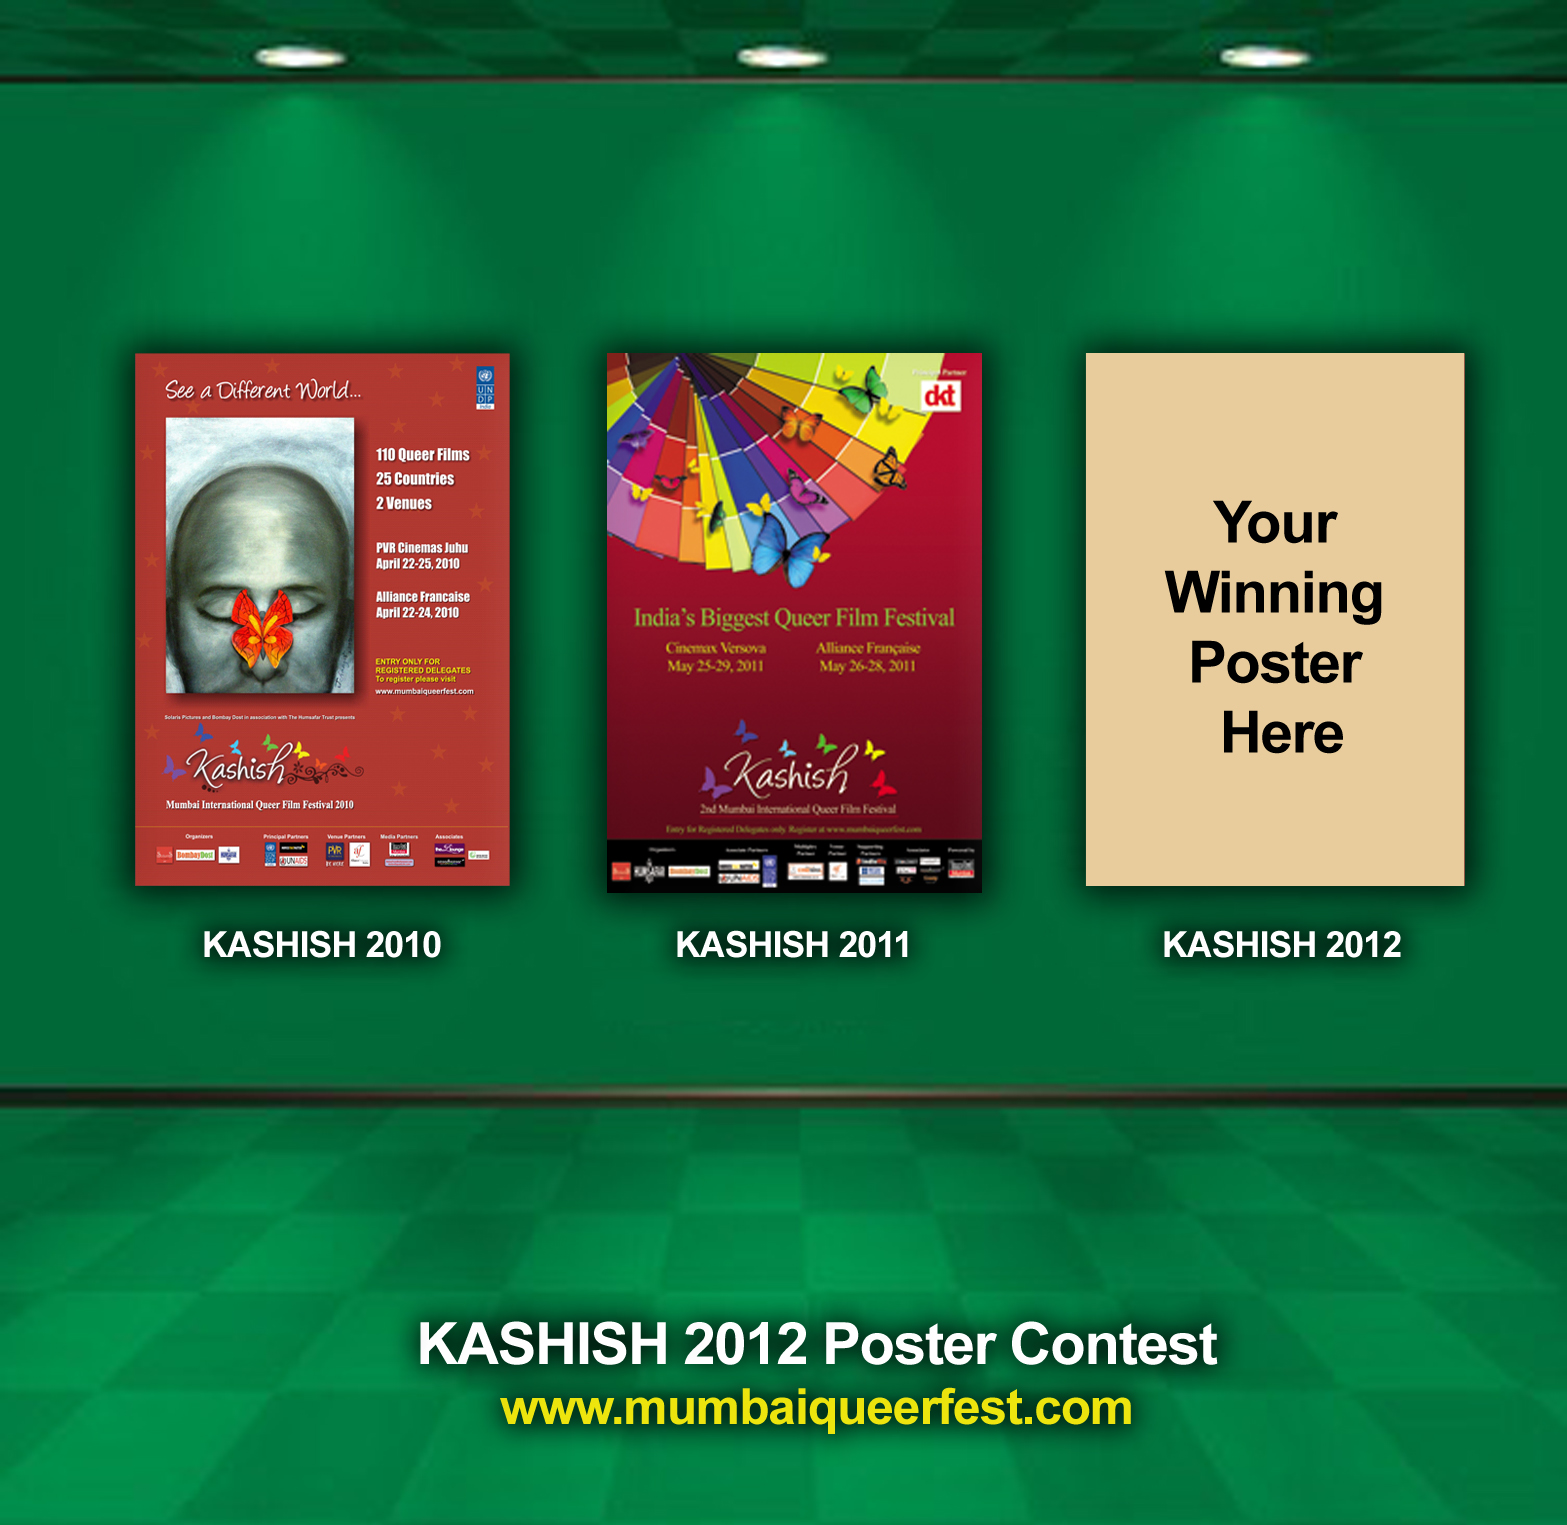 http://1.bp.blogspot.com/-54-Gqu50HTw/T1fpONL2KzI/AAAAAAAAe7c/hSQ4_QHhzks/s1600/KASHISH2012+Poster+Contest.jpg